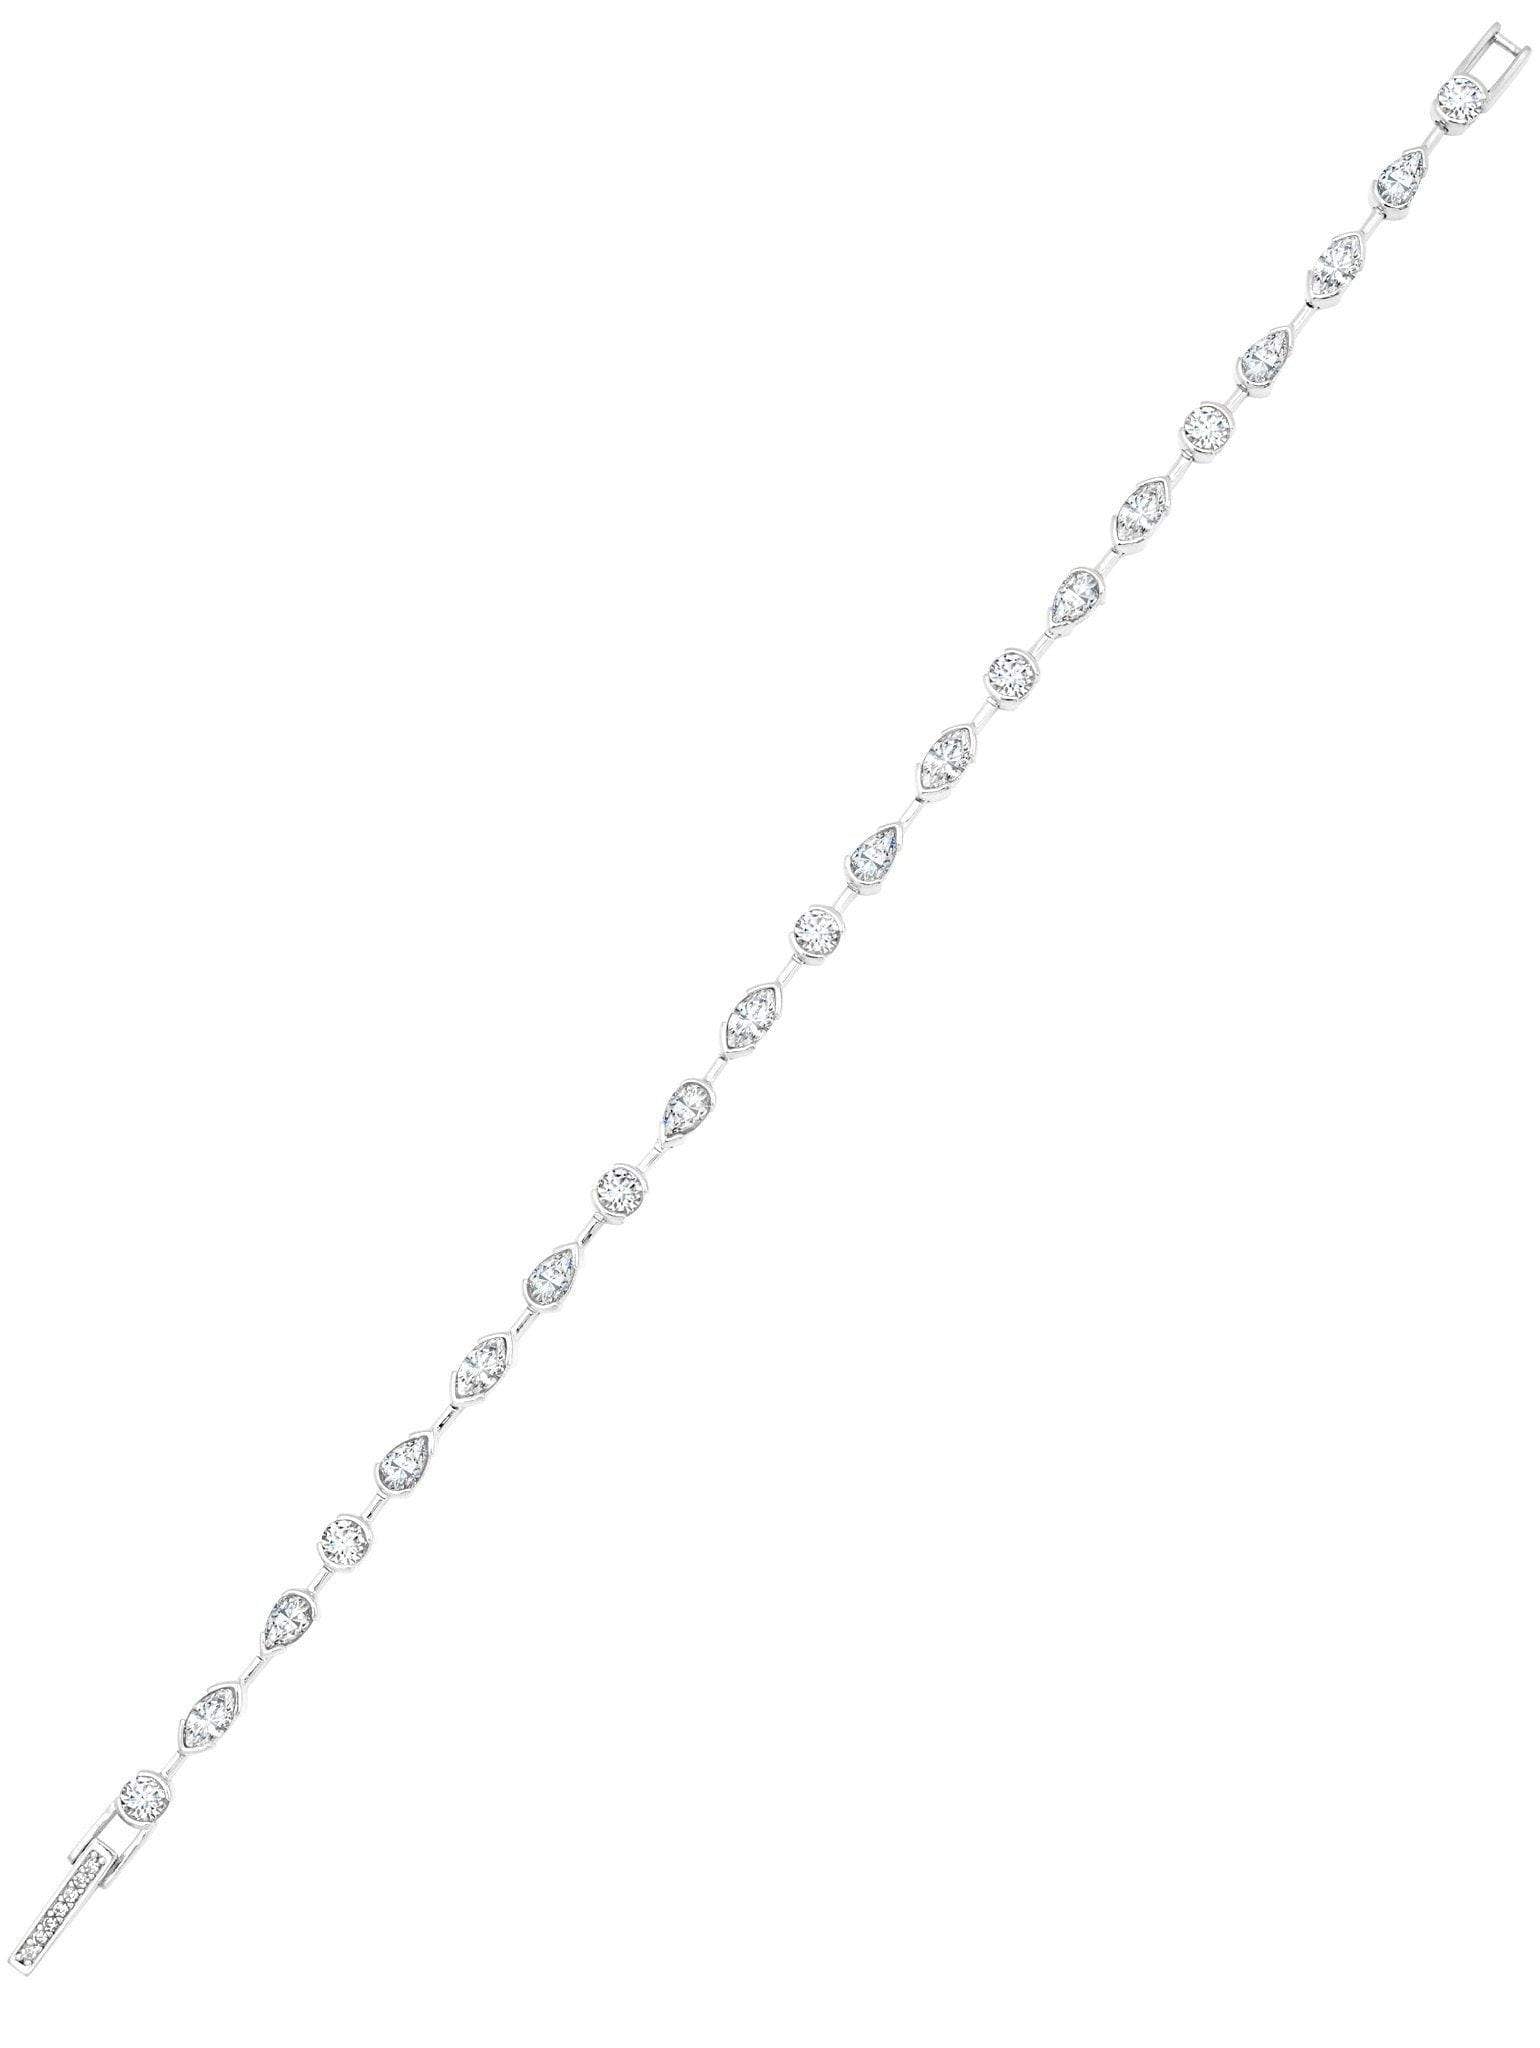 Crislu Jewelry Crislu Lavish Cubic Zirconia Tennis Bracelet Finished in Pure Platinum